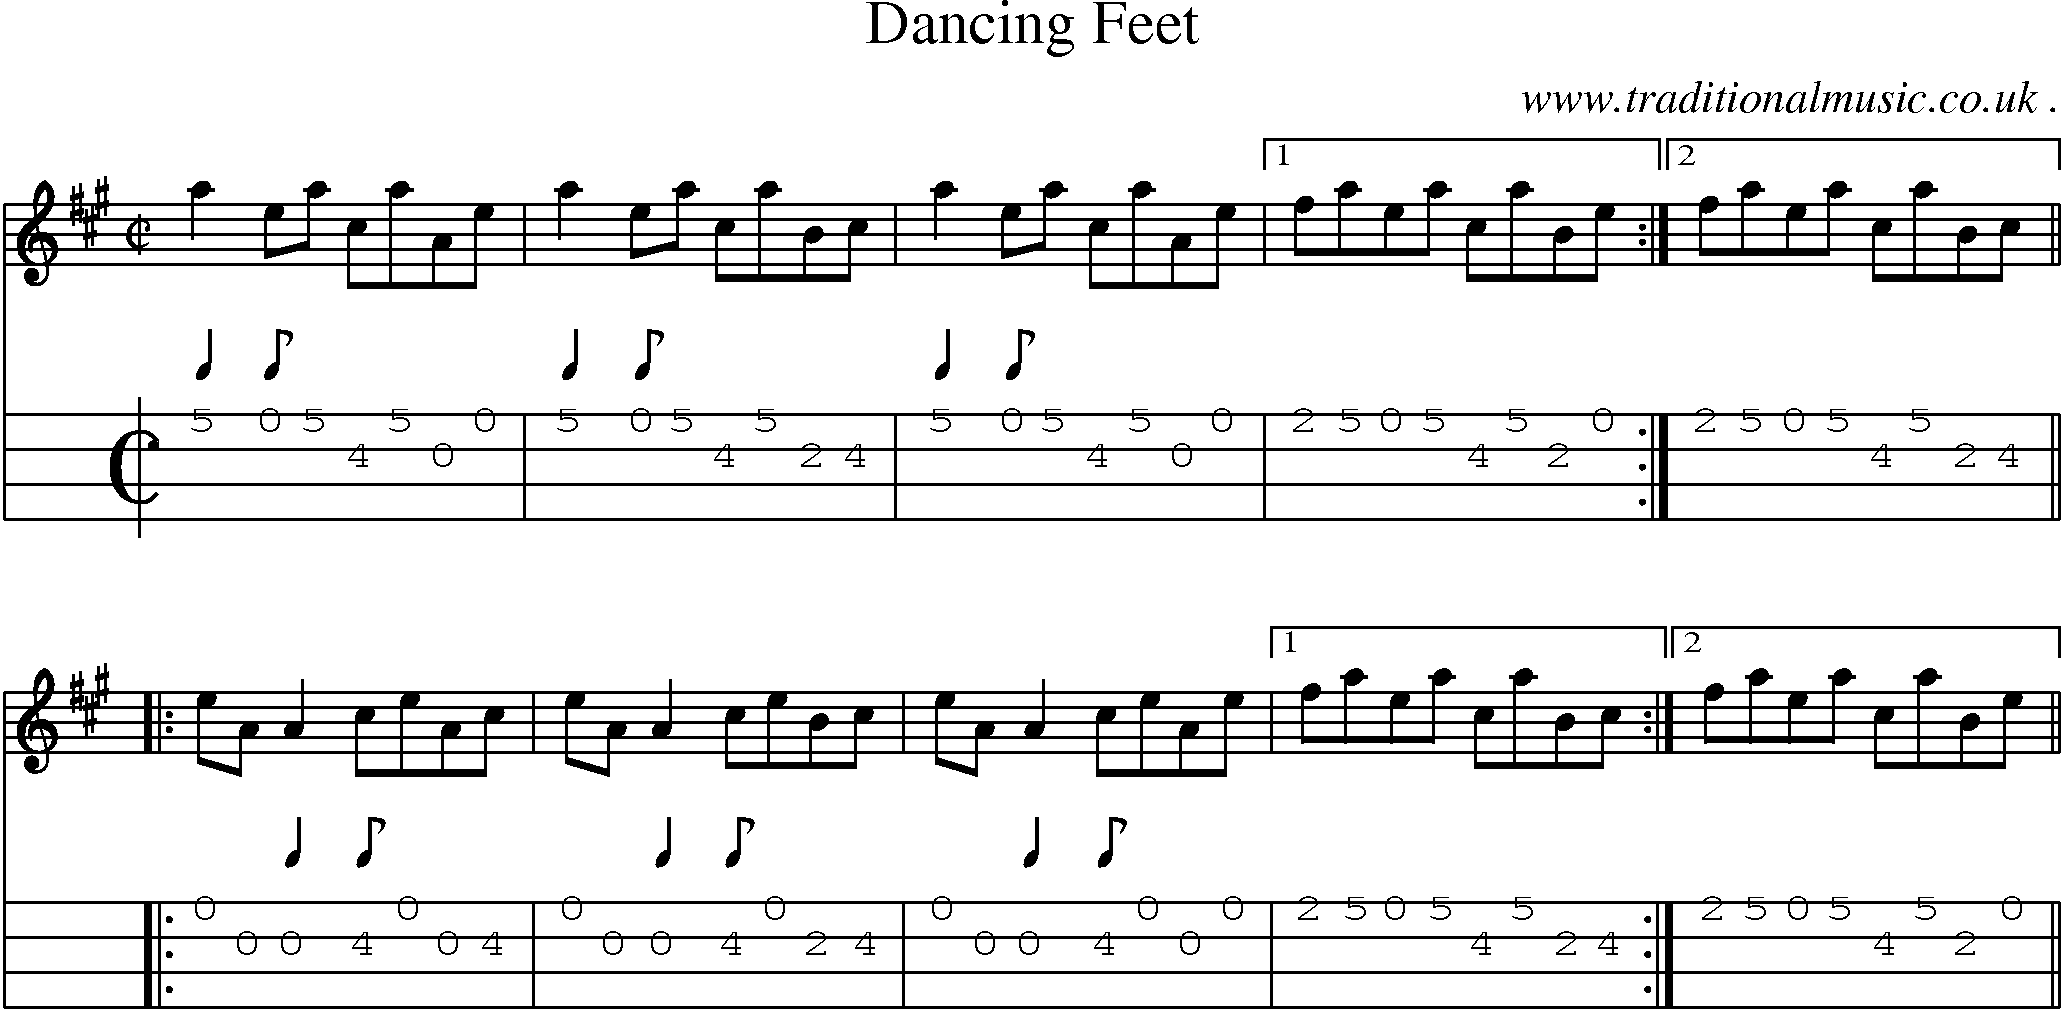 Sheet-Music and Mandolin Tabs for Dancing Feet